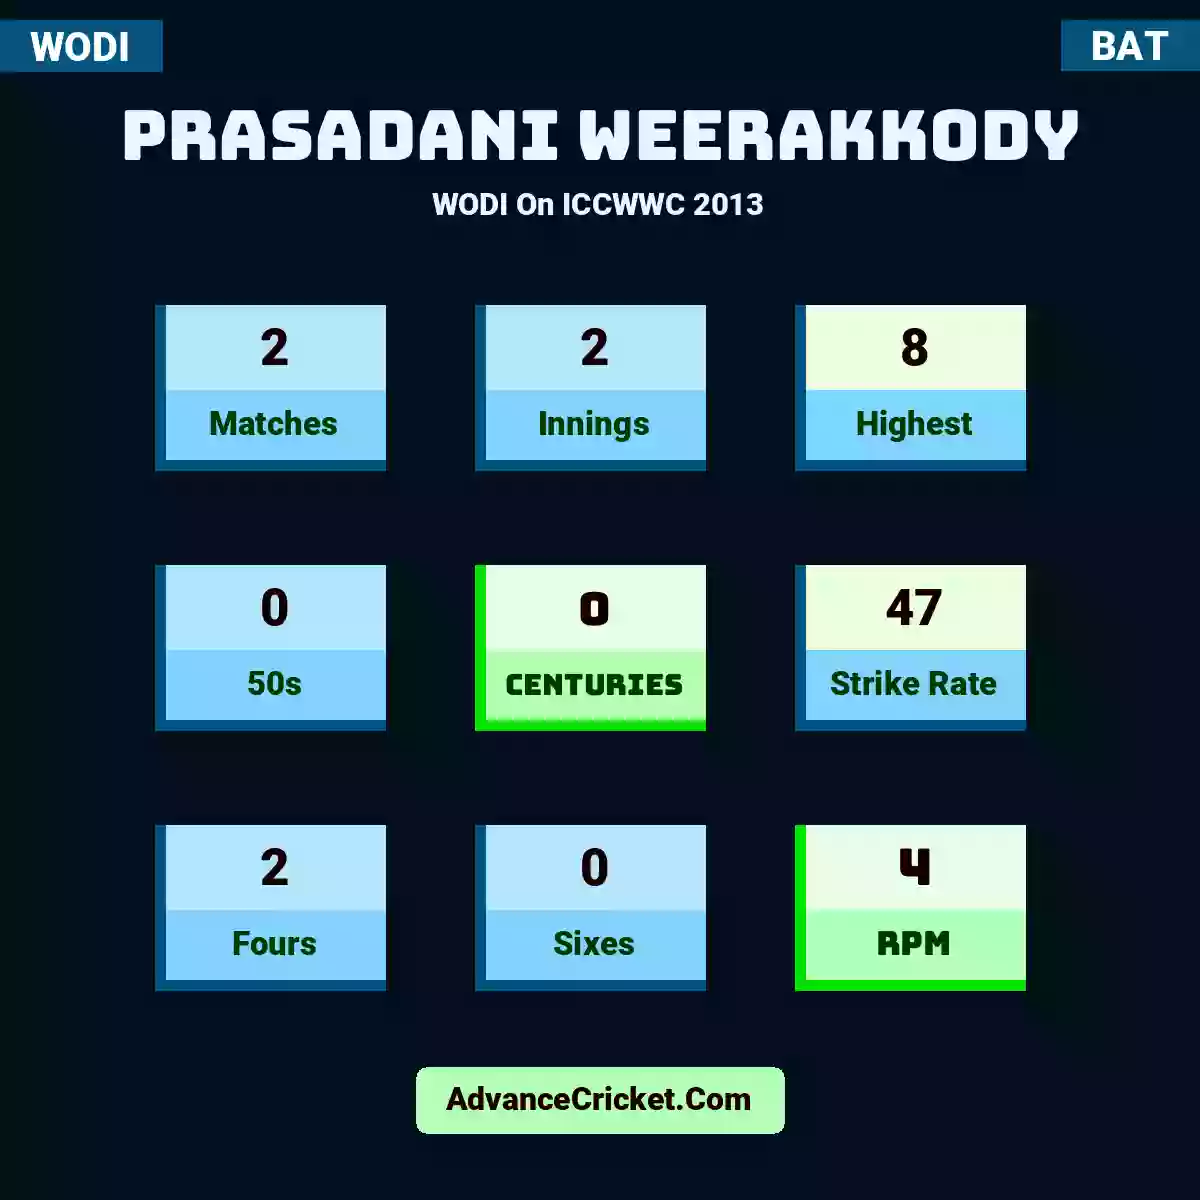 Prasadani Weerakkody WODI  On ICCWWC 2013, Prasadani Weerakkody played 2 matches, scored 8 runs as highest, 0 half-centuries, and 0 centuries, with a strike rate of 47. P.Weerakkody hit 2 fours and 0 sixes, with an RPM of 4.